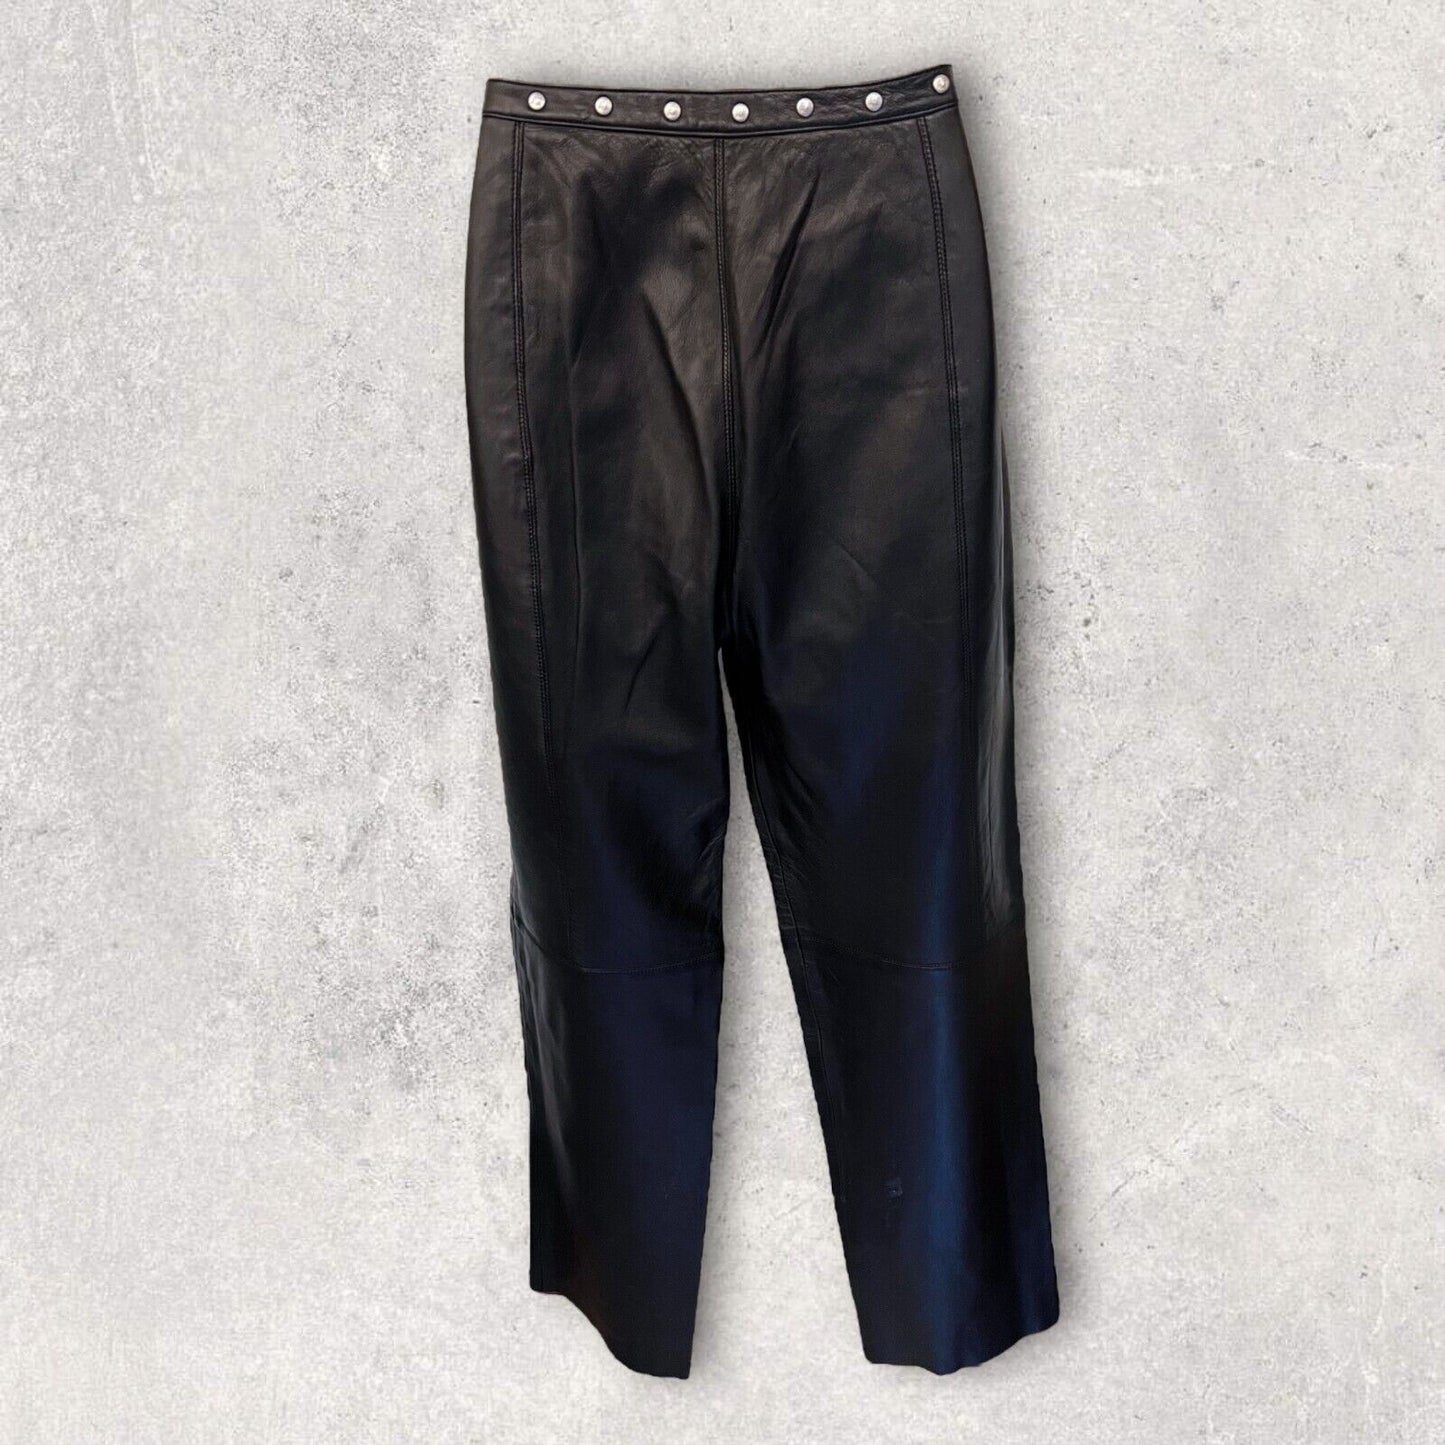 Armani Jeans Womens Black Leather Mid Rise Vintage Trousers UK 14/16 US 10/12 EU 42/44 Timeless Fashions